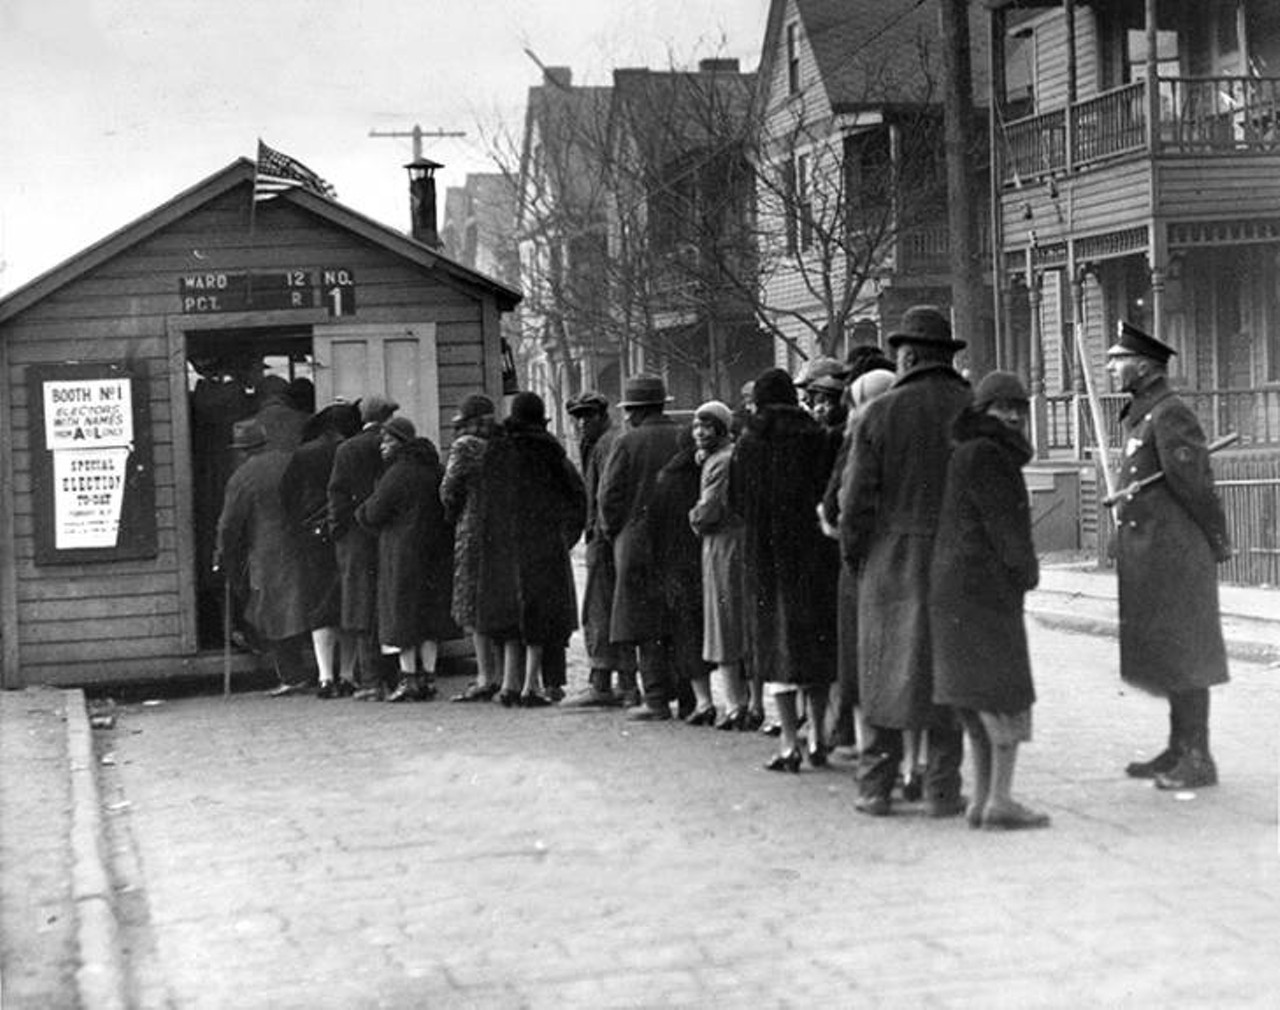  Ward 12 Voters in Line, 1932 